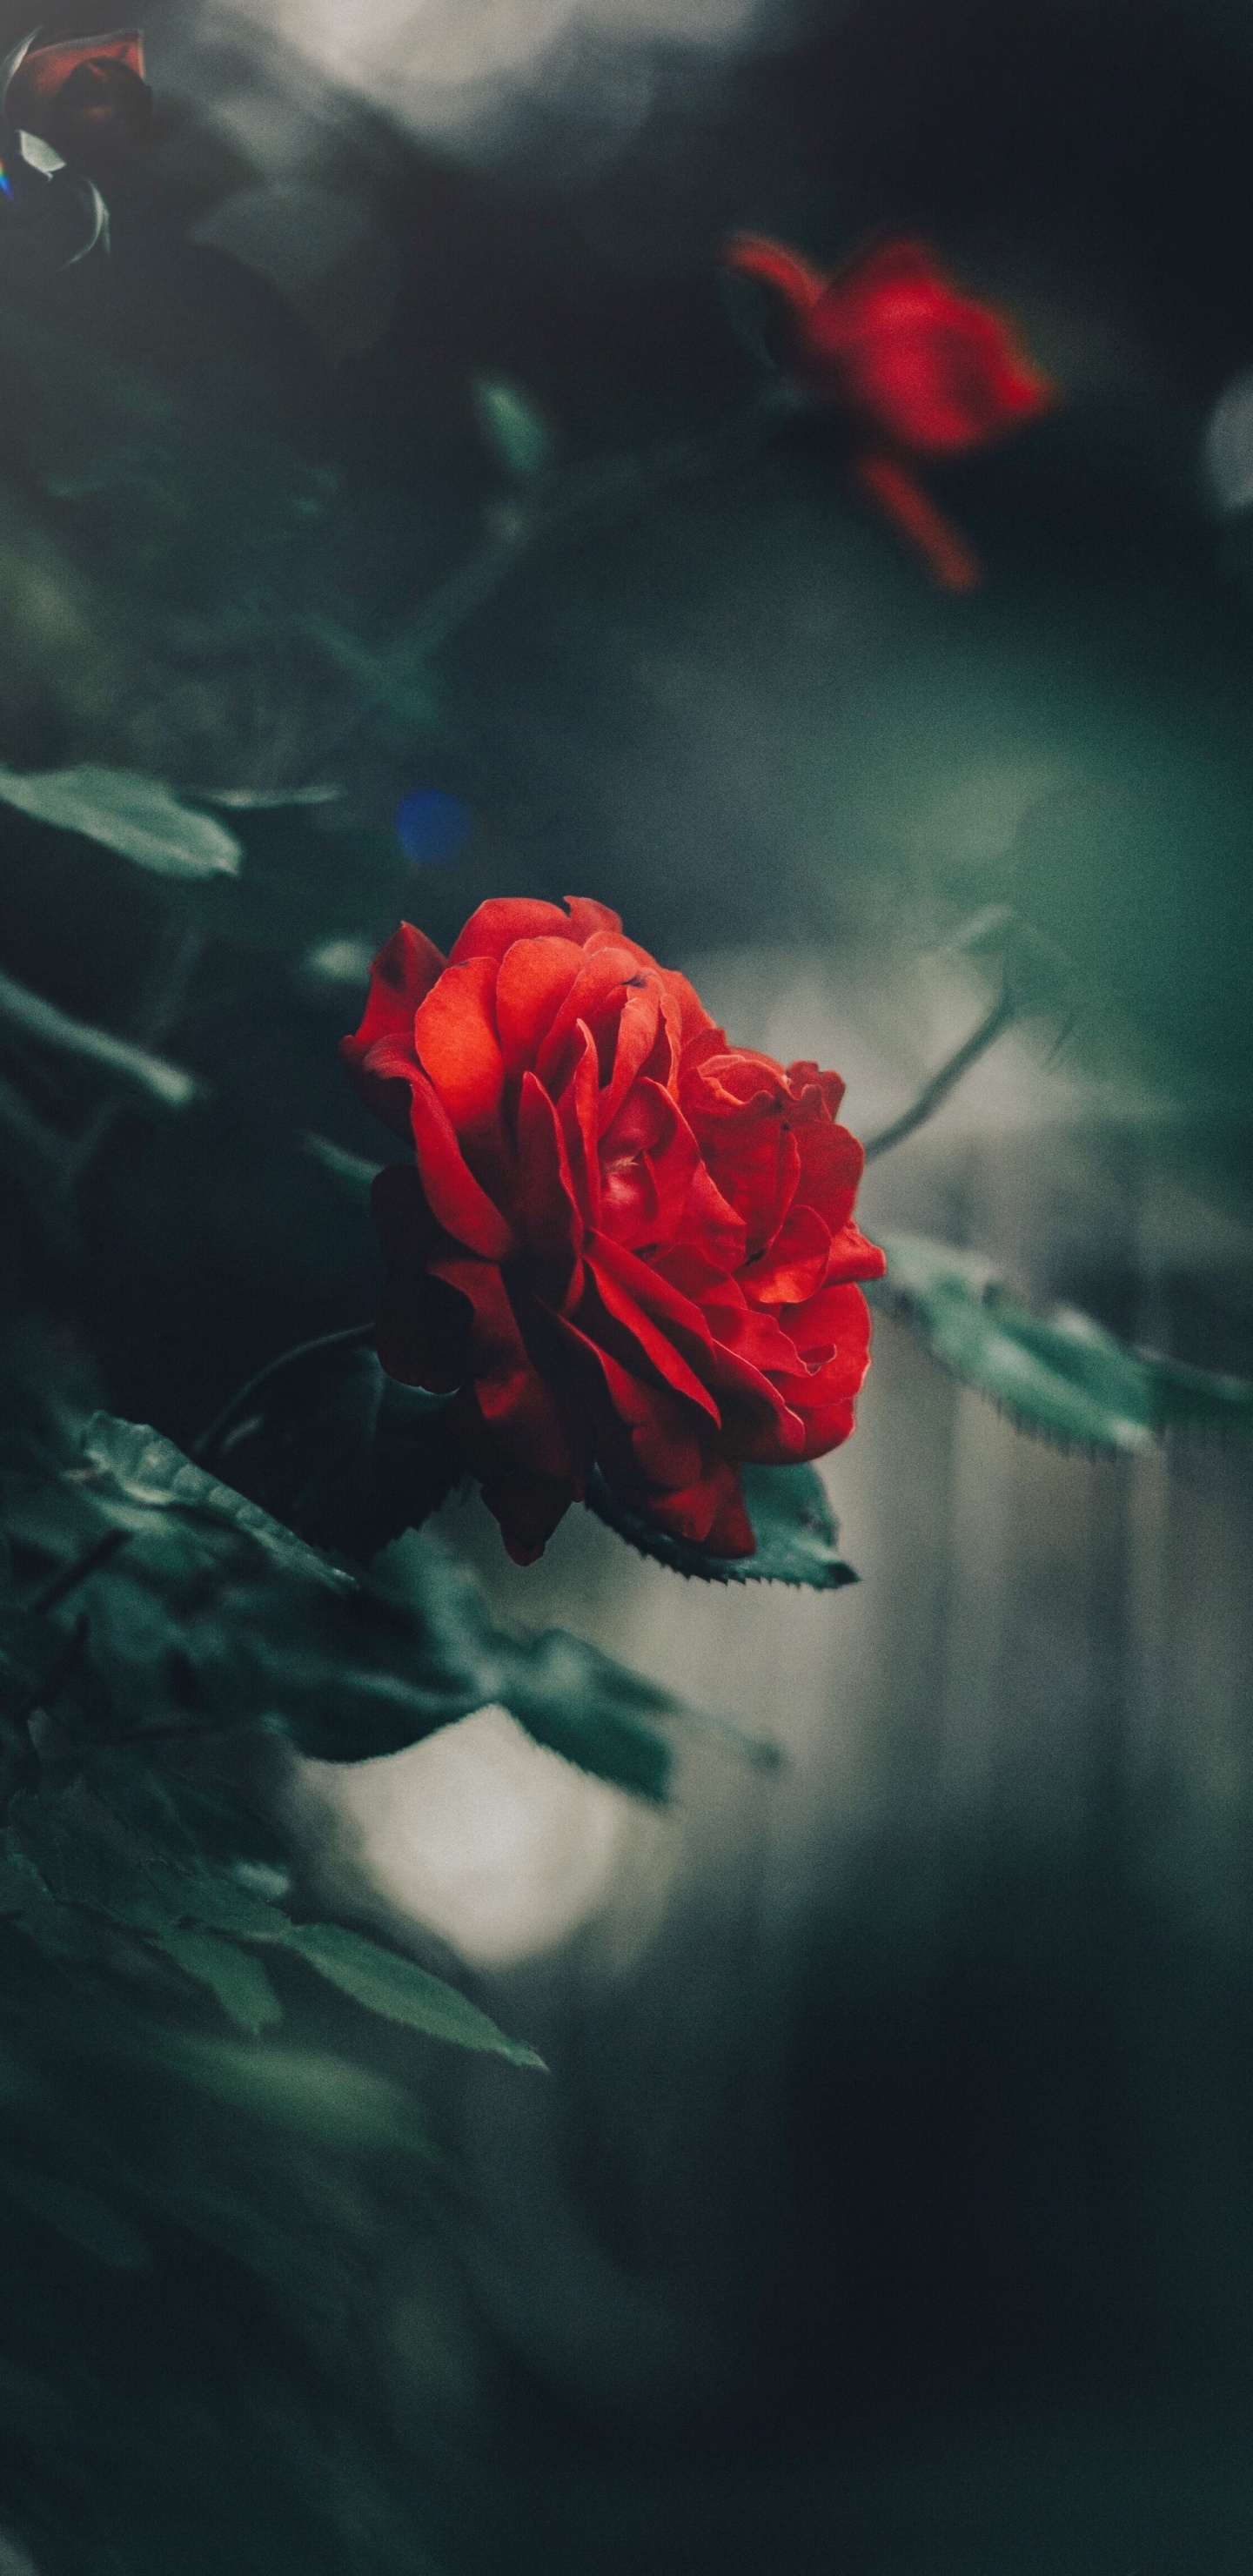 Rose Rouge en Fleurs Pendant la Journée. Wallpaper in 1440x2960 Resolution